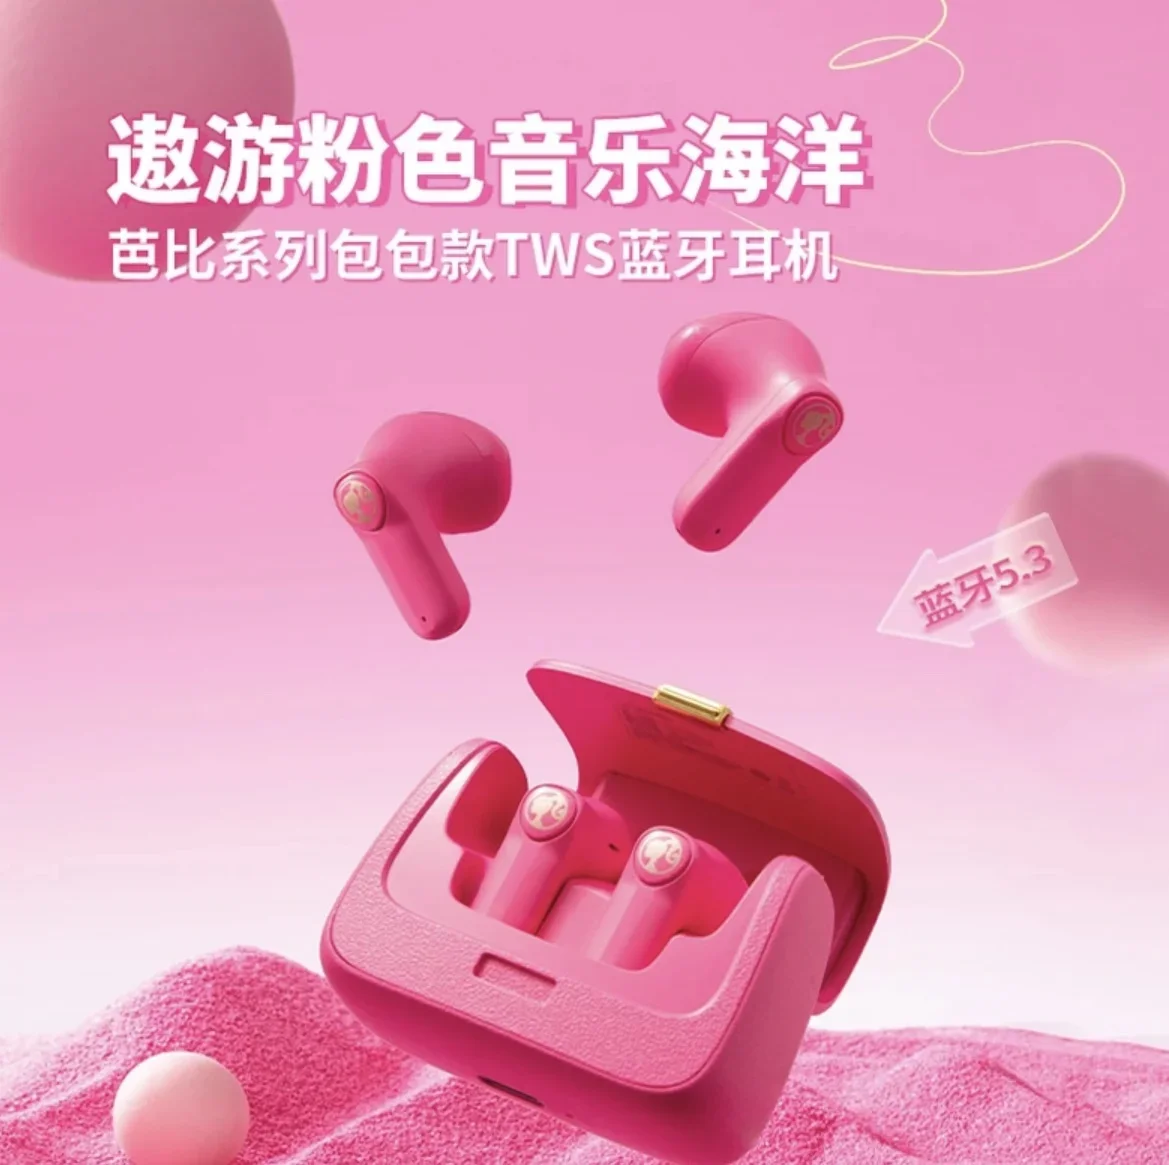 

Genuine Miniso Barbie Series Tws Bluetooth Headphones Pink Cute Creative Handbag Shape In-Ear Earplugs Girls Holiday Gift